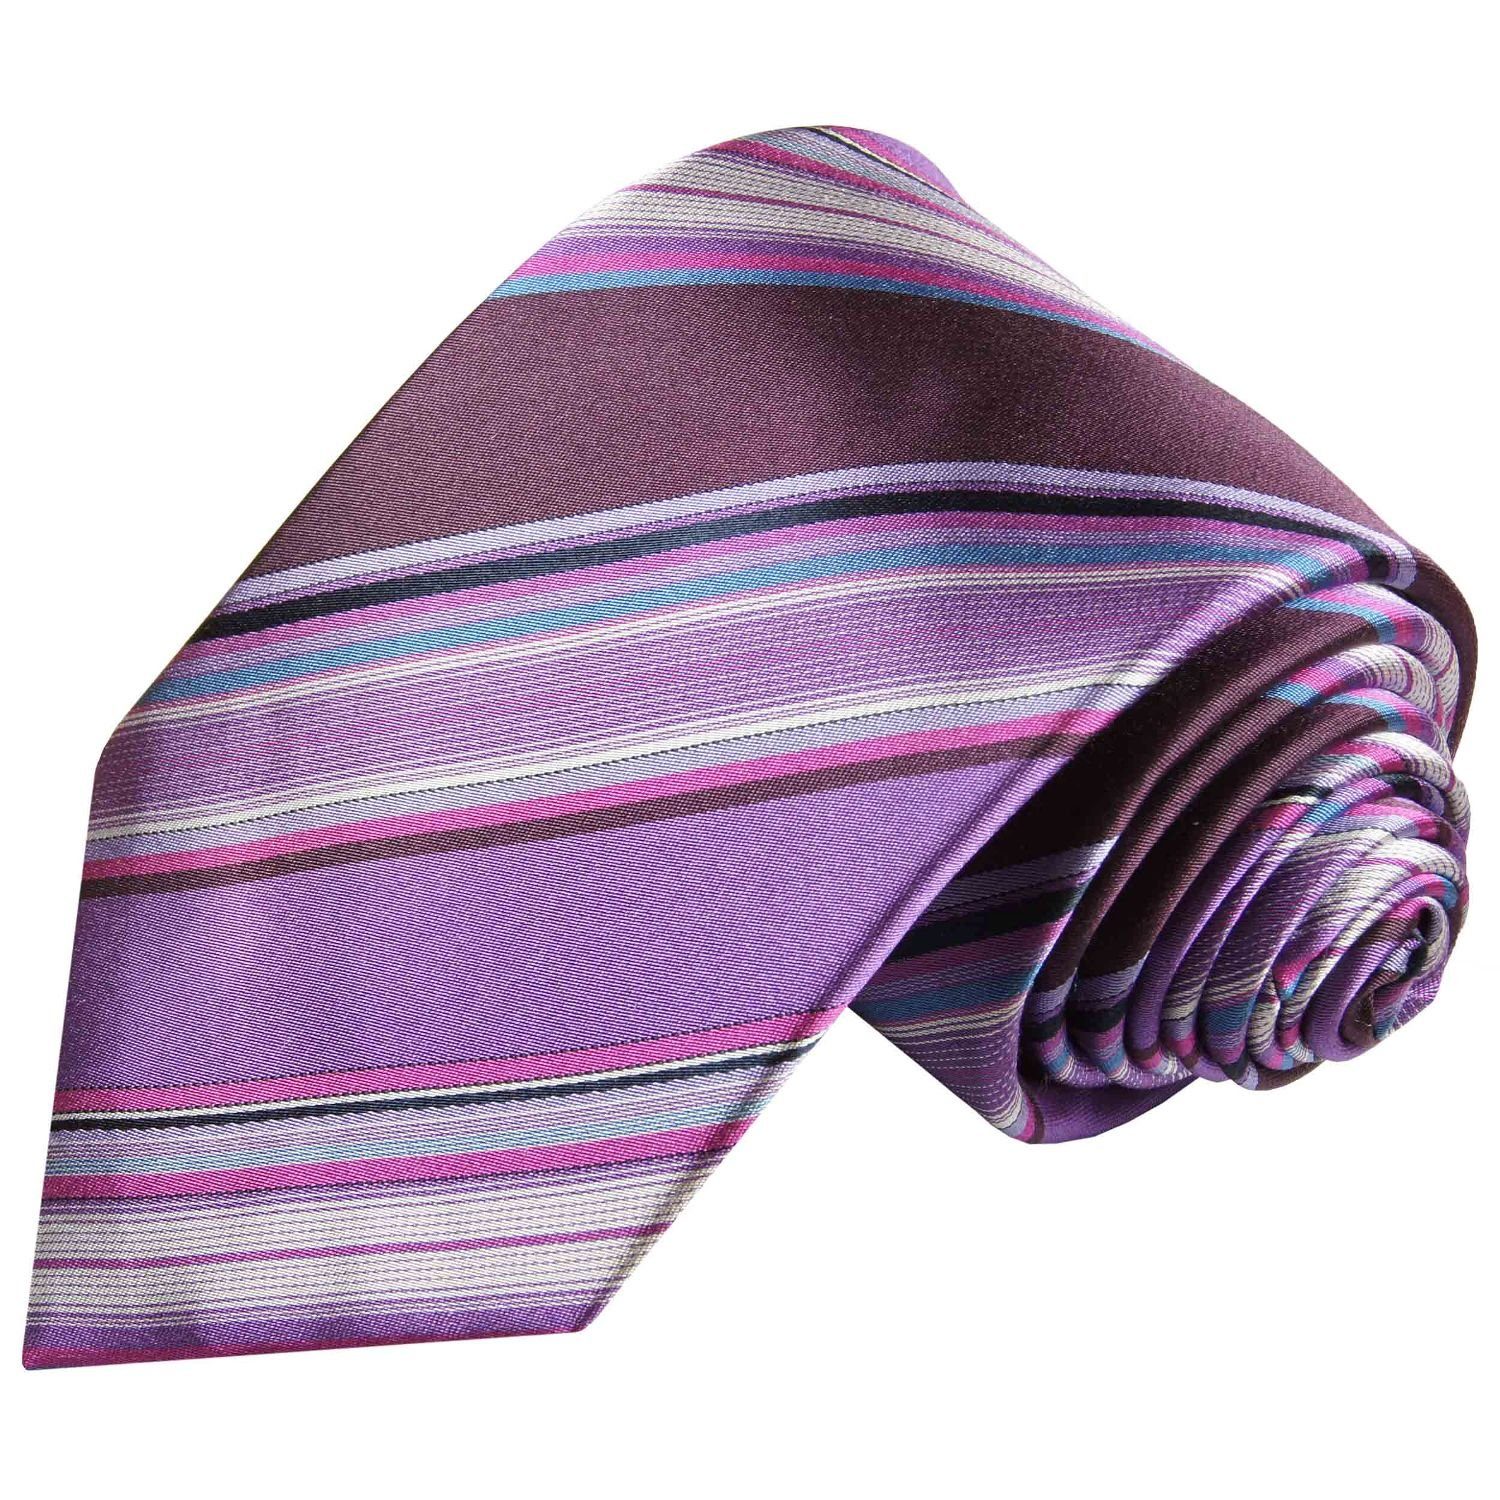 Paul Malone Krawatte Designer Seidenkrawatte Herren Schlips modern gestreift 100% Seide Schmal (6cm), lila violett 251